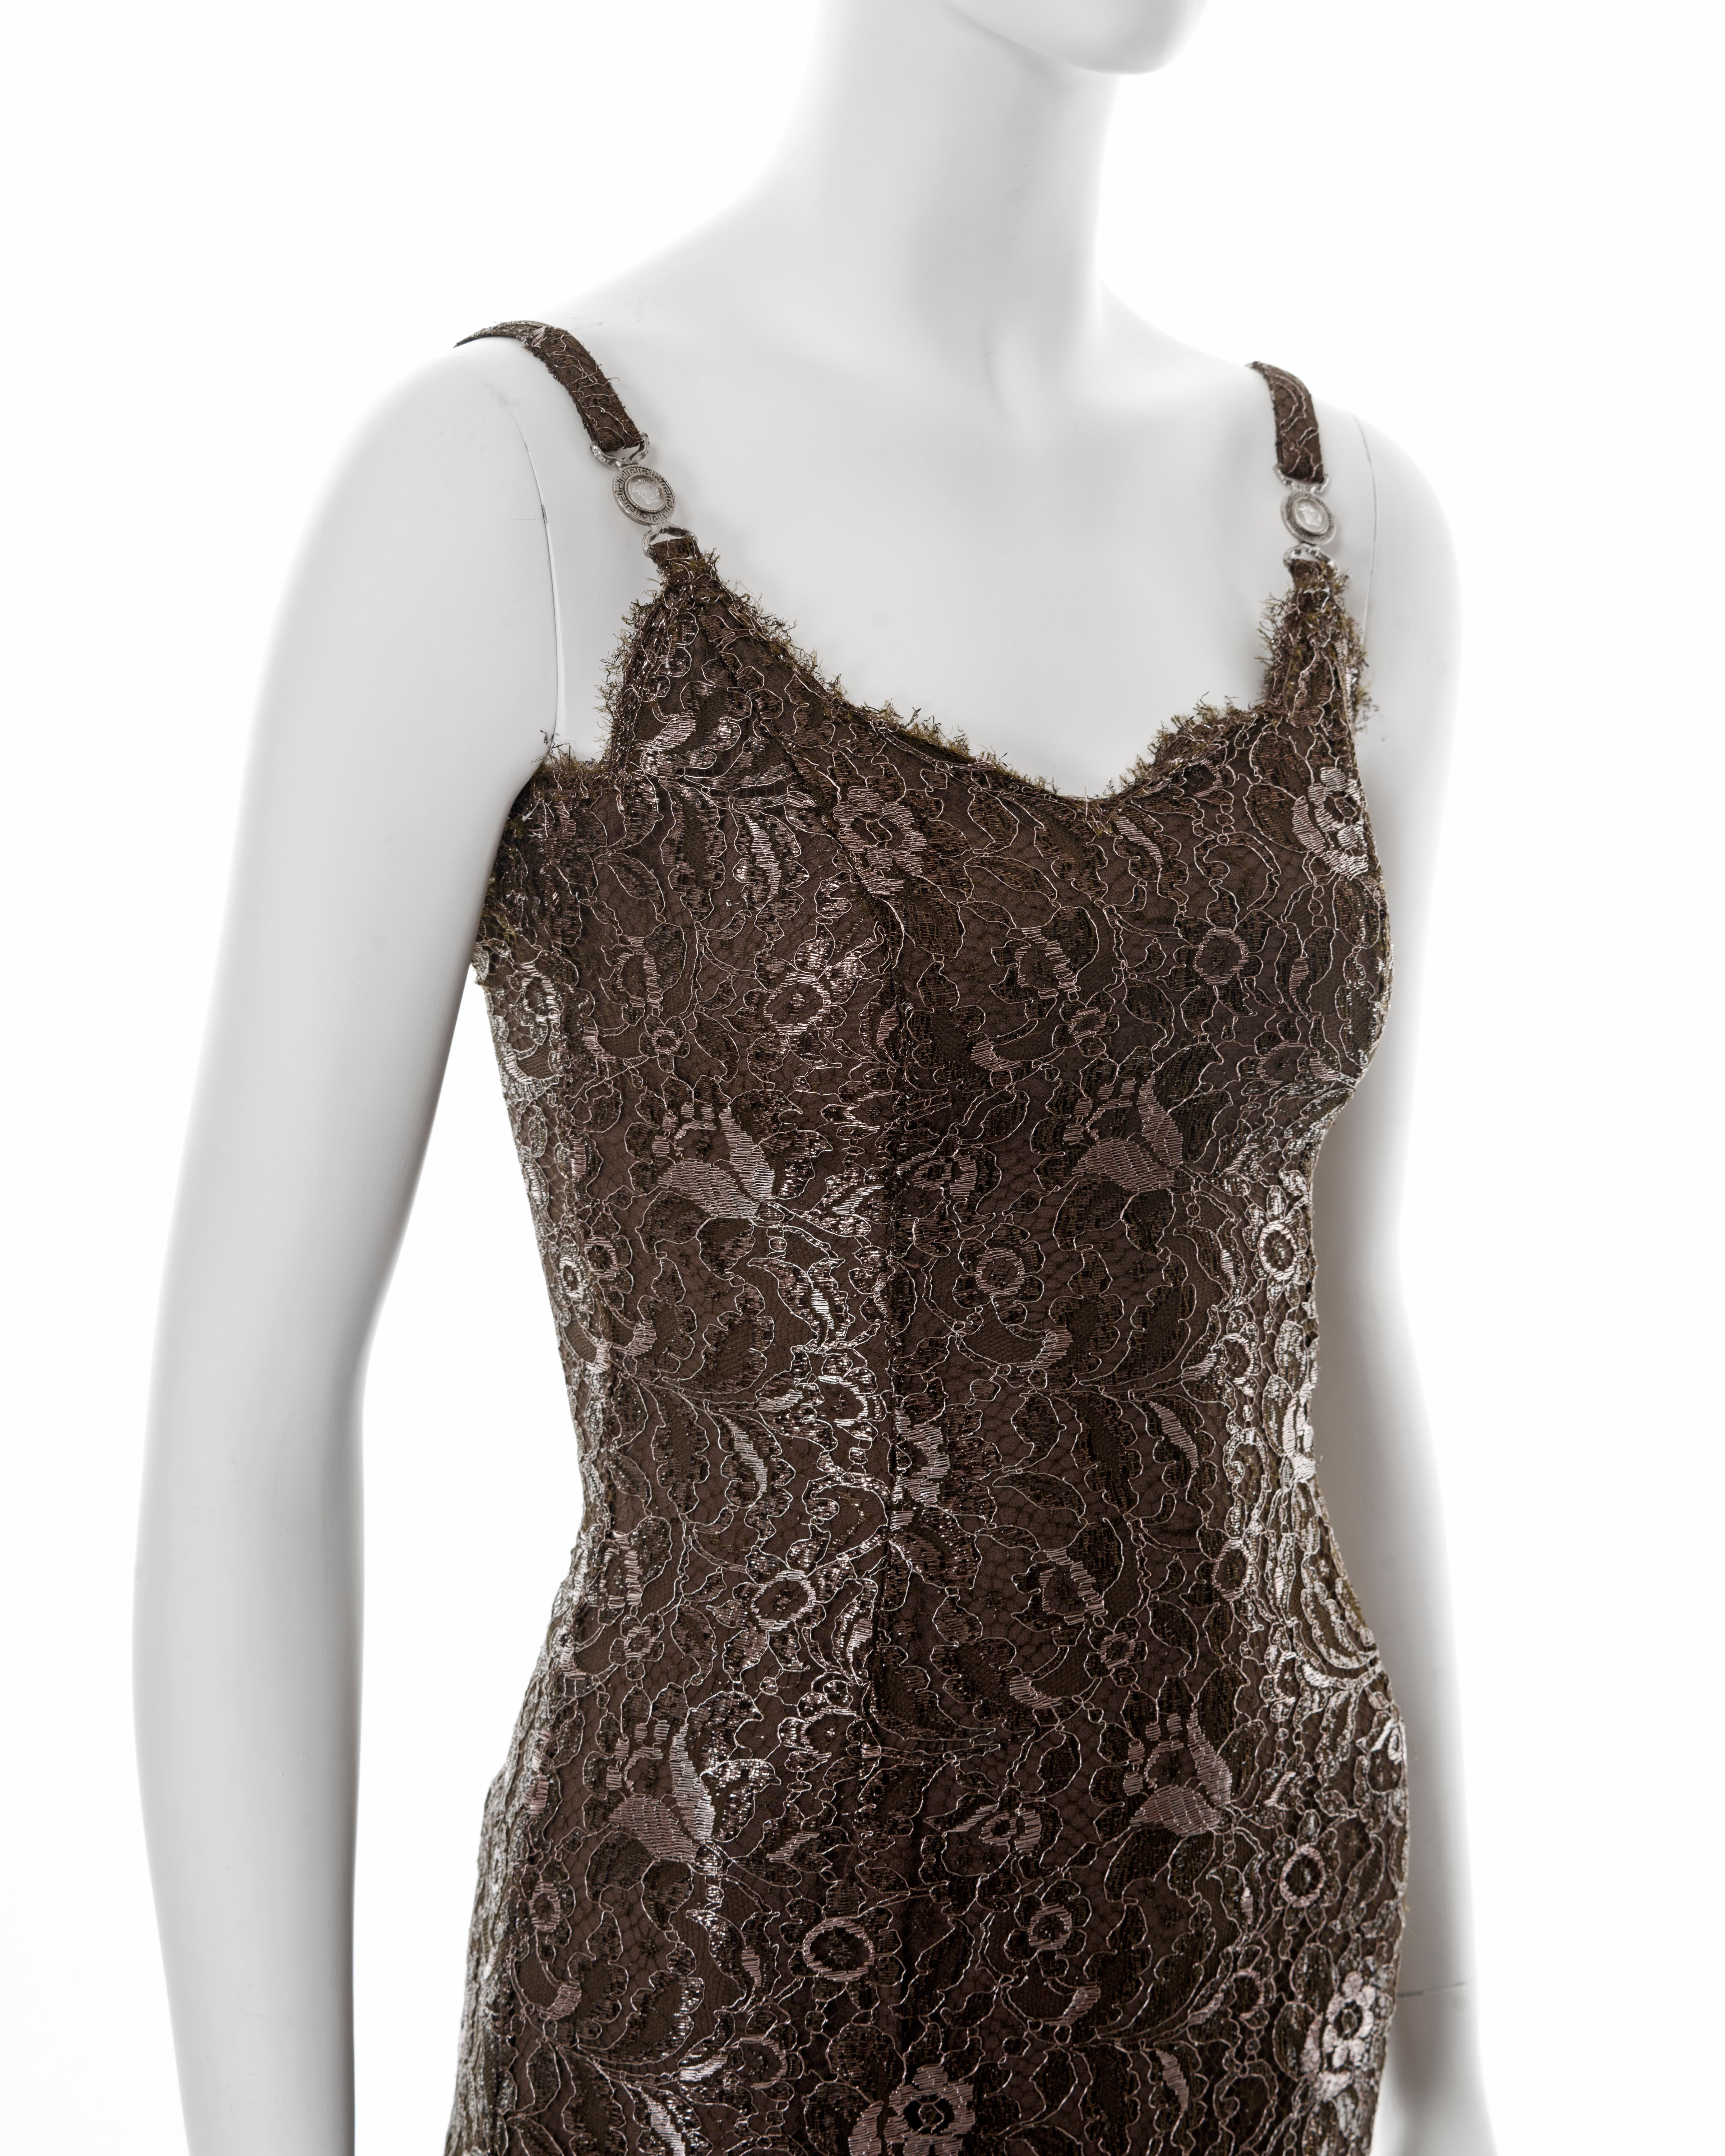 Gianni Versace metallic brown lace evening mini dress, fw 1996 For Sale 3